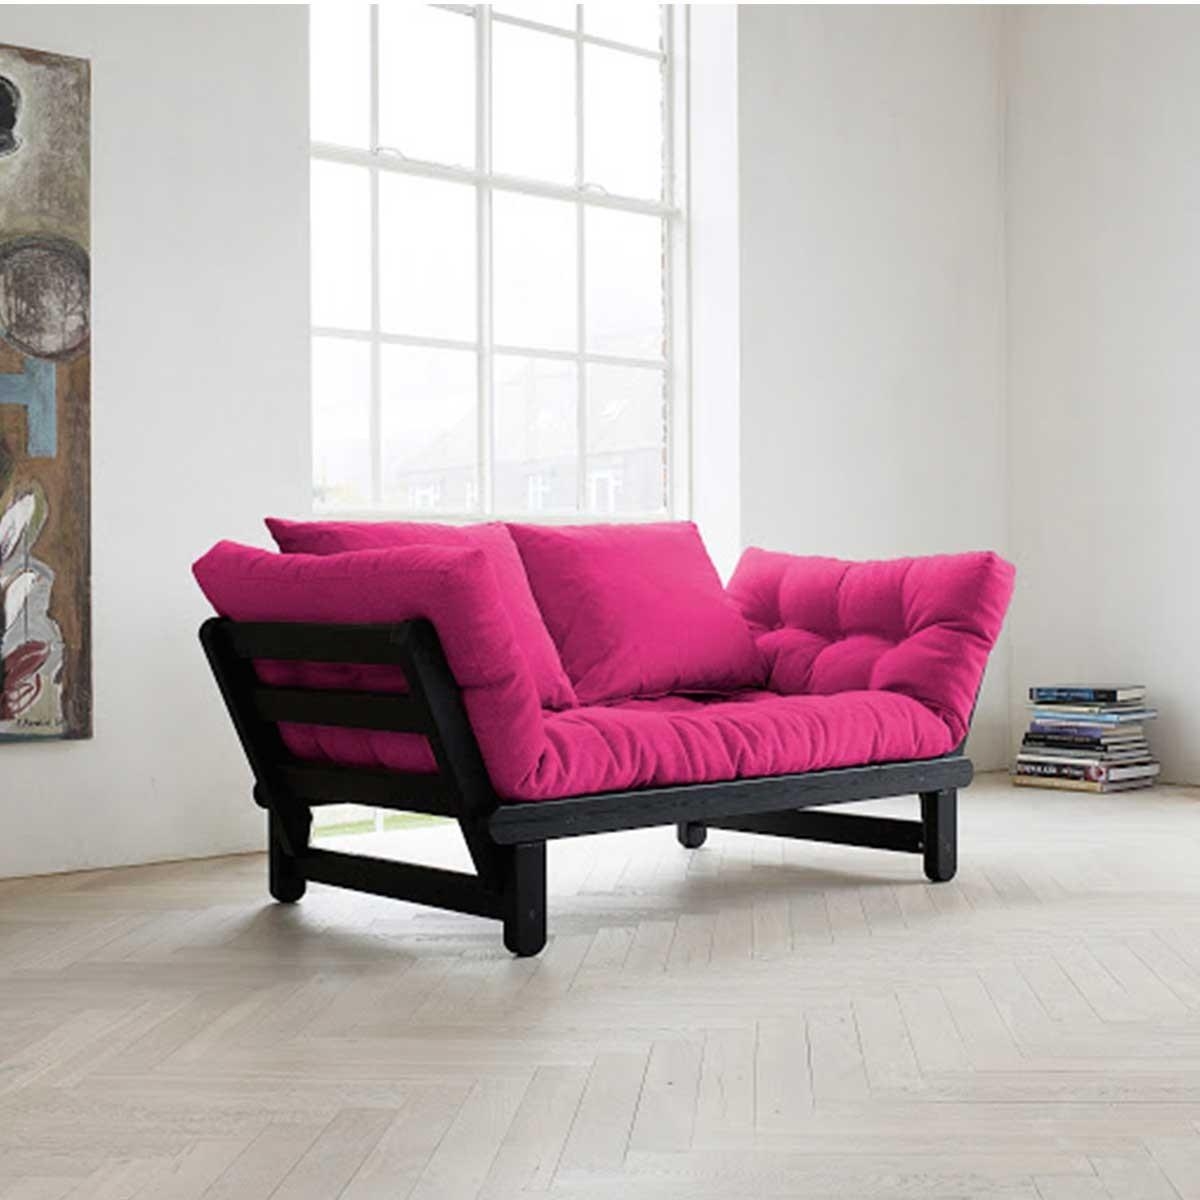 Pink futon bed